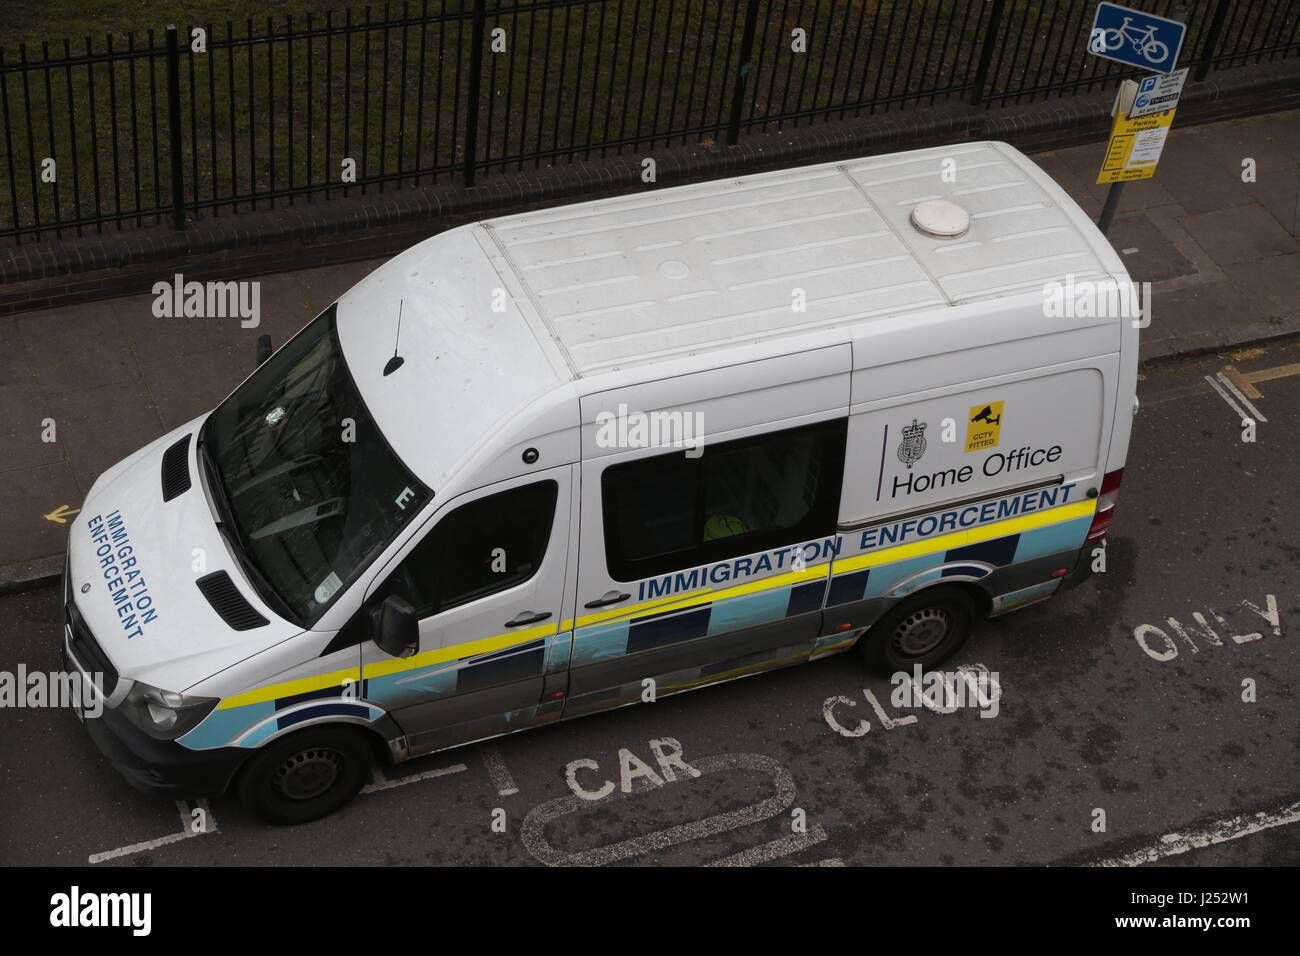 Immigration Enforcement van parked in Narrow Street London E14 8BP Stock Photo